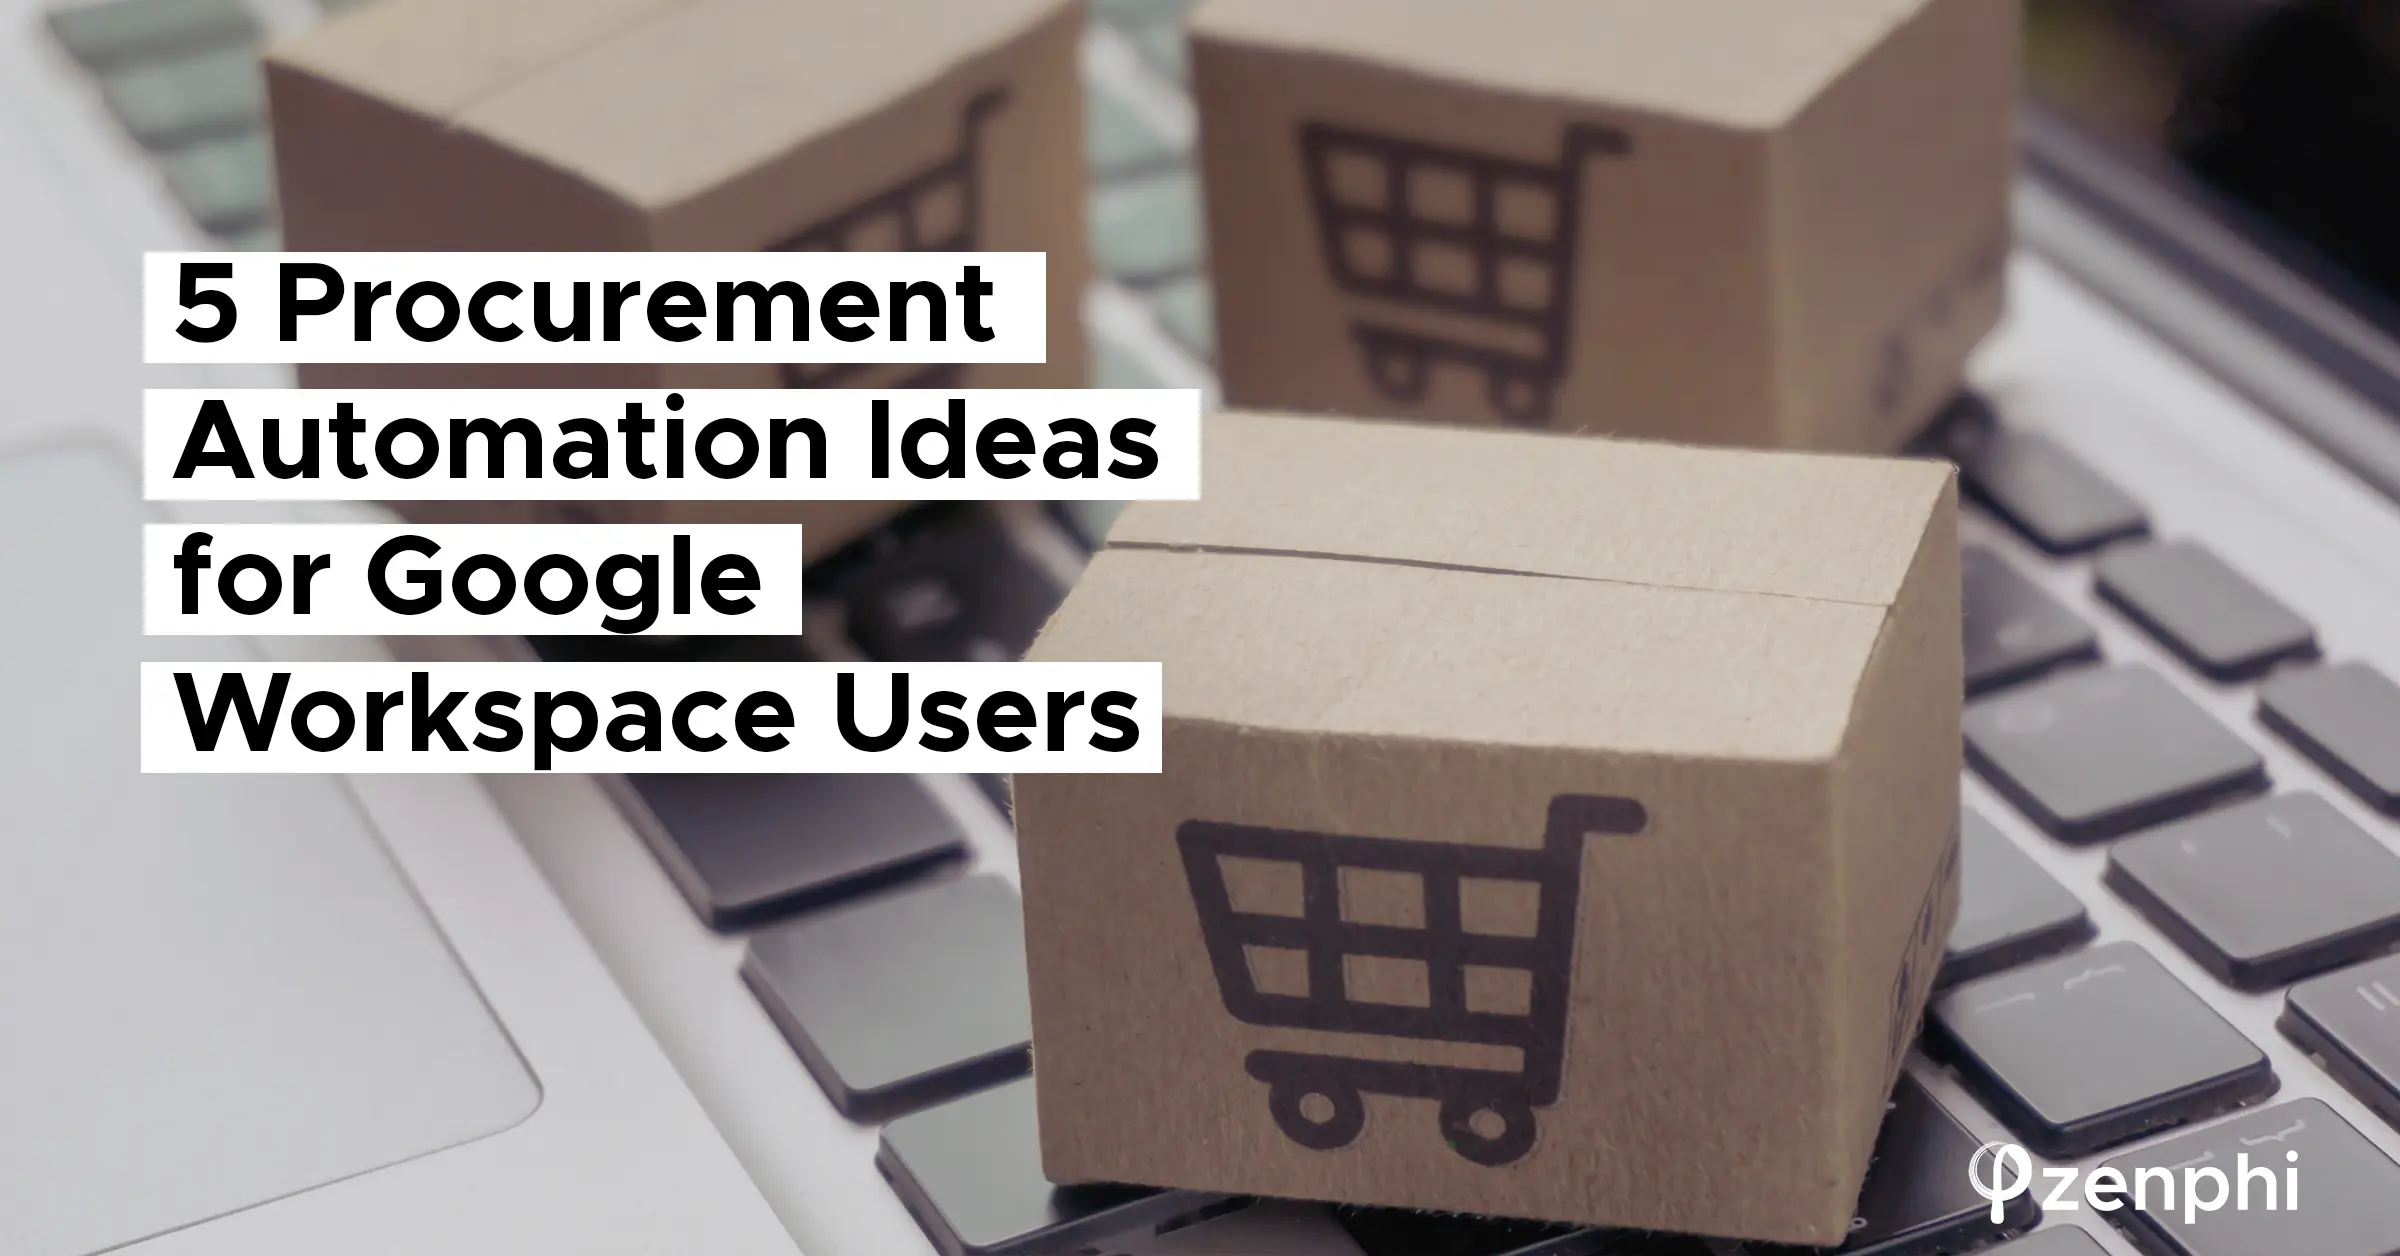 5 Procurement Automation Ideas for Google Workspace Users